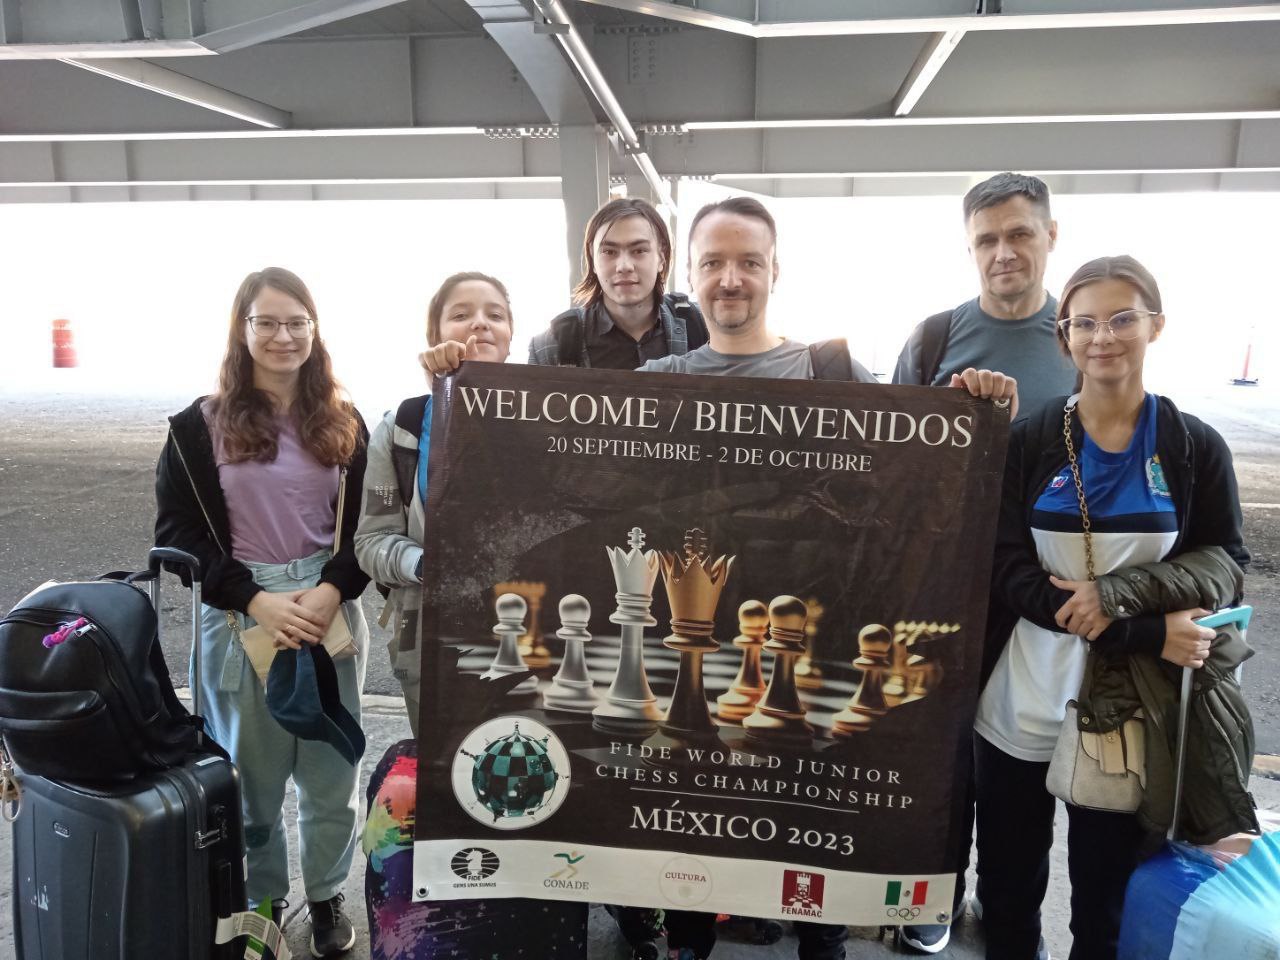 FIDE World Junior Chess Championship “México 2023” OPEN • Round 2 •